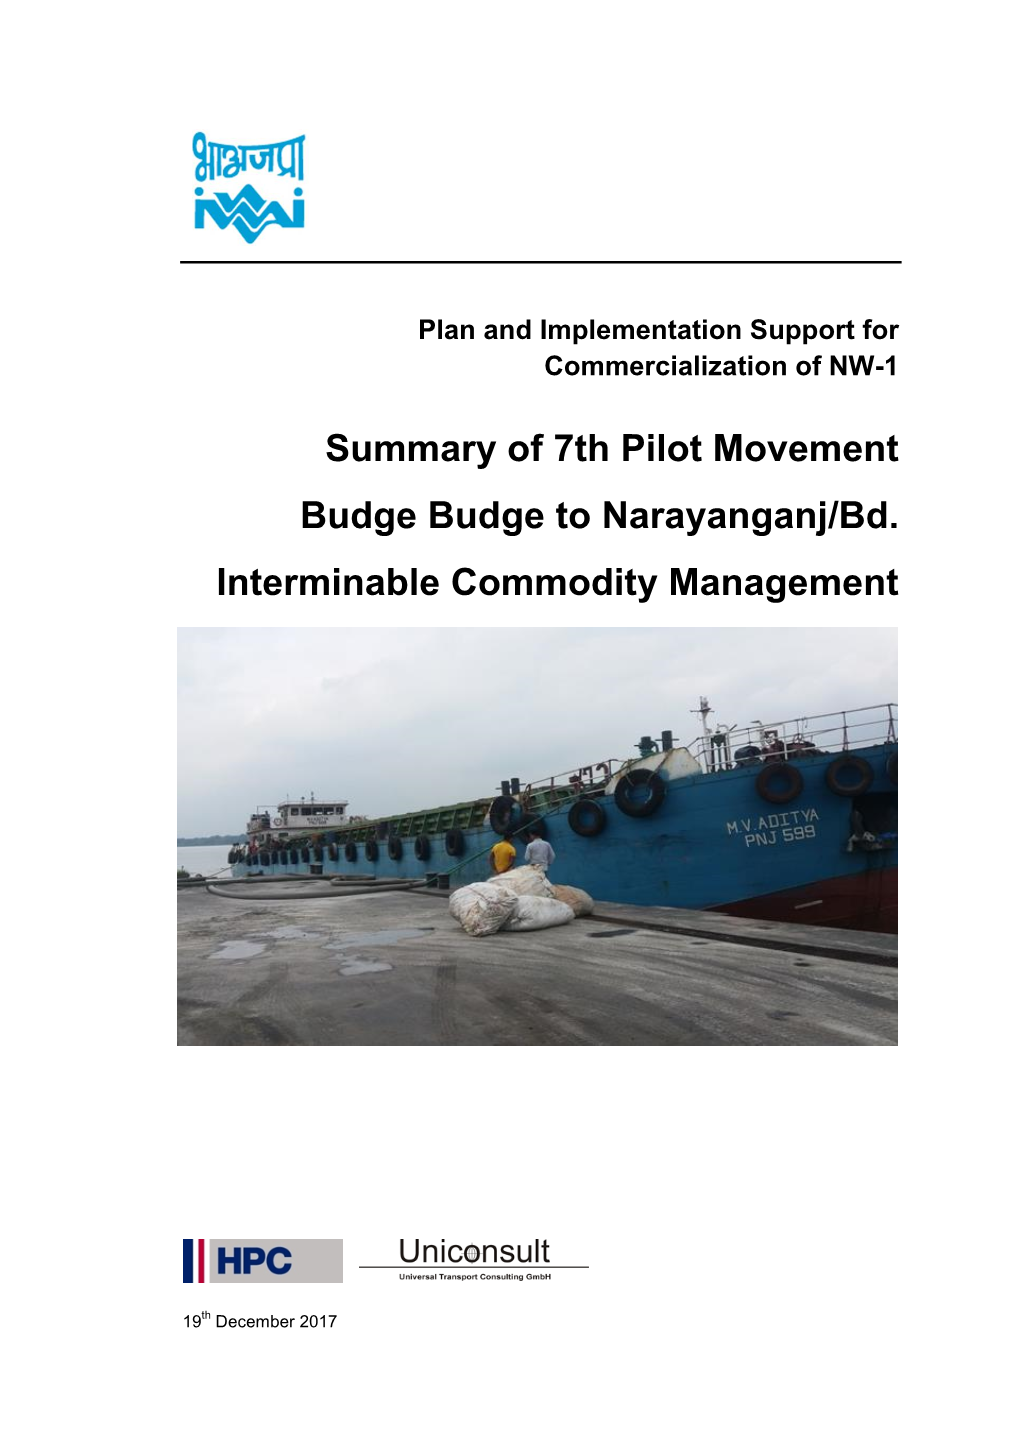 Summary of 7Th Pilot Movement Budge Budge to Narayanganj/Bd. Interminable Commodity Management